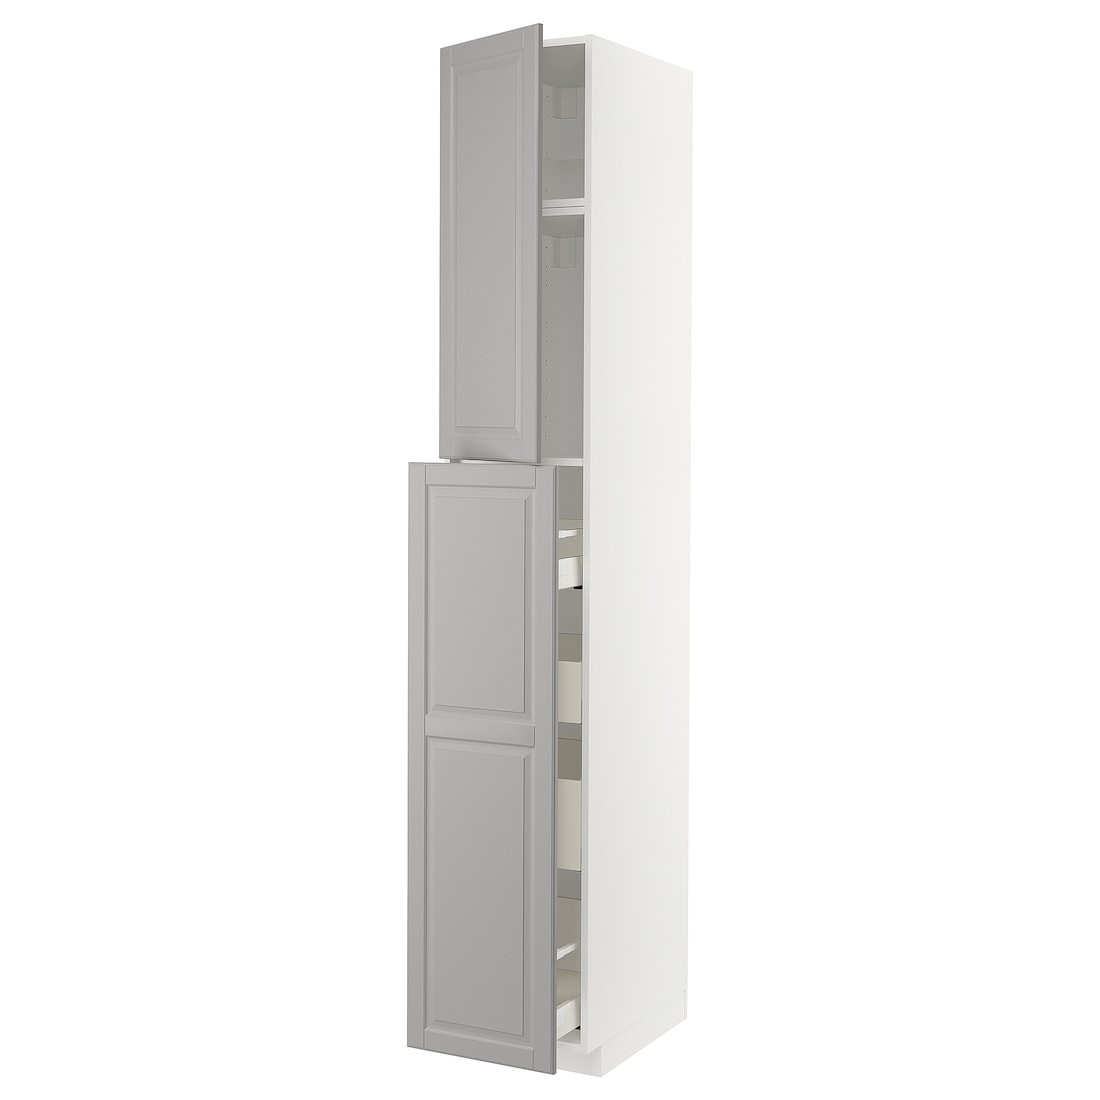 IKEA METOD МЕТОД / MAXIMERA МАКСИМЕРА Высокий шкаф полки / ящики, белый / Bodbyn серый, 40x60x240 см 89459052 894.590.52